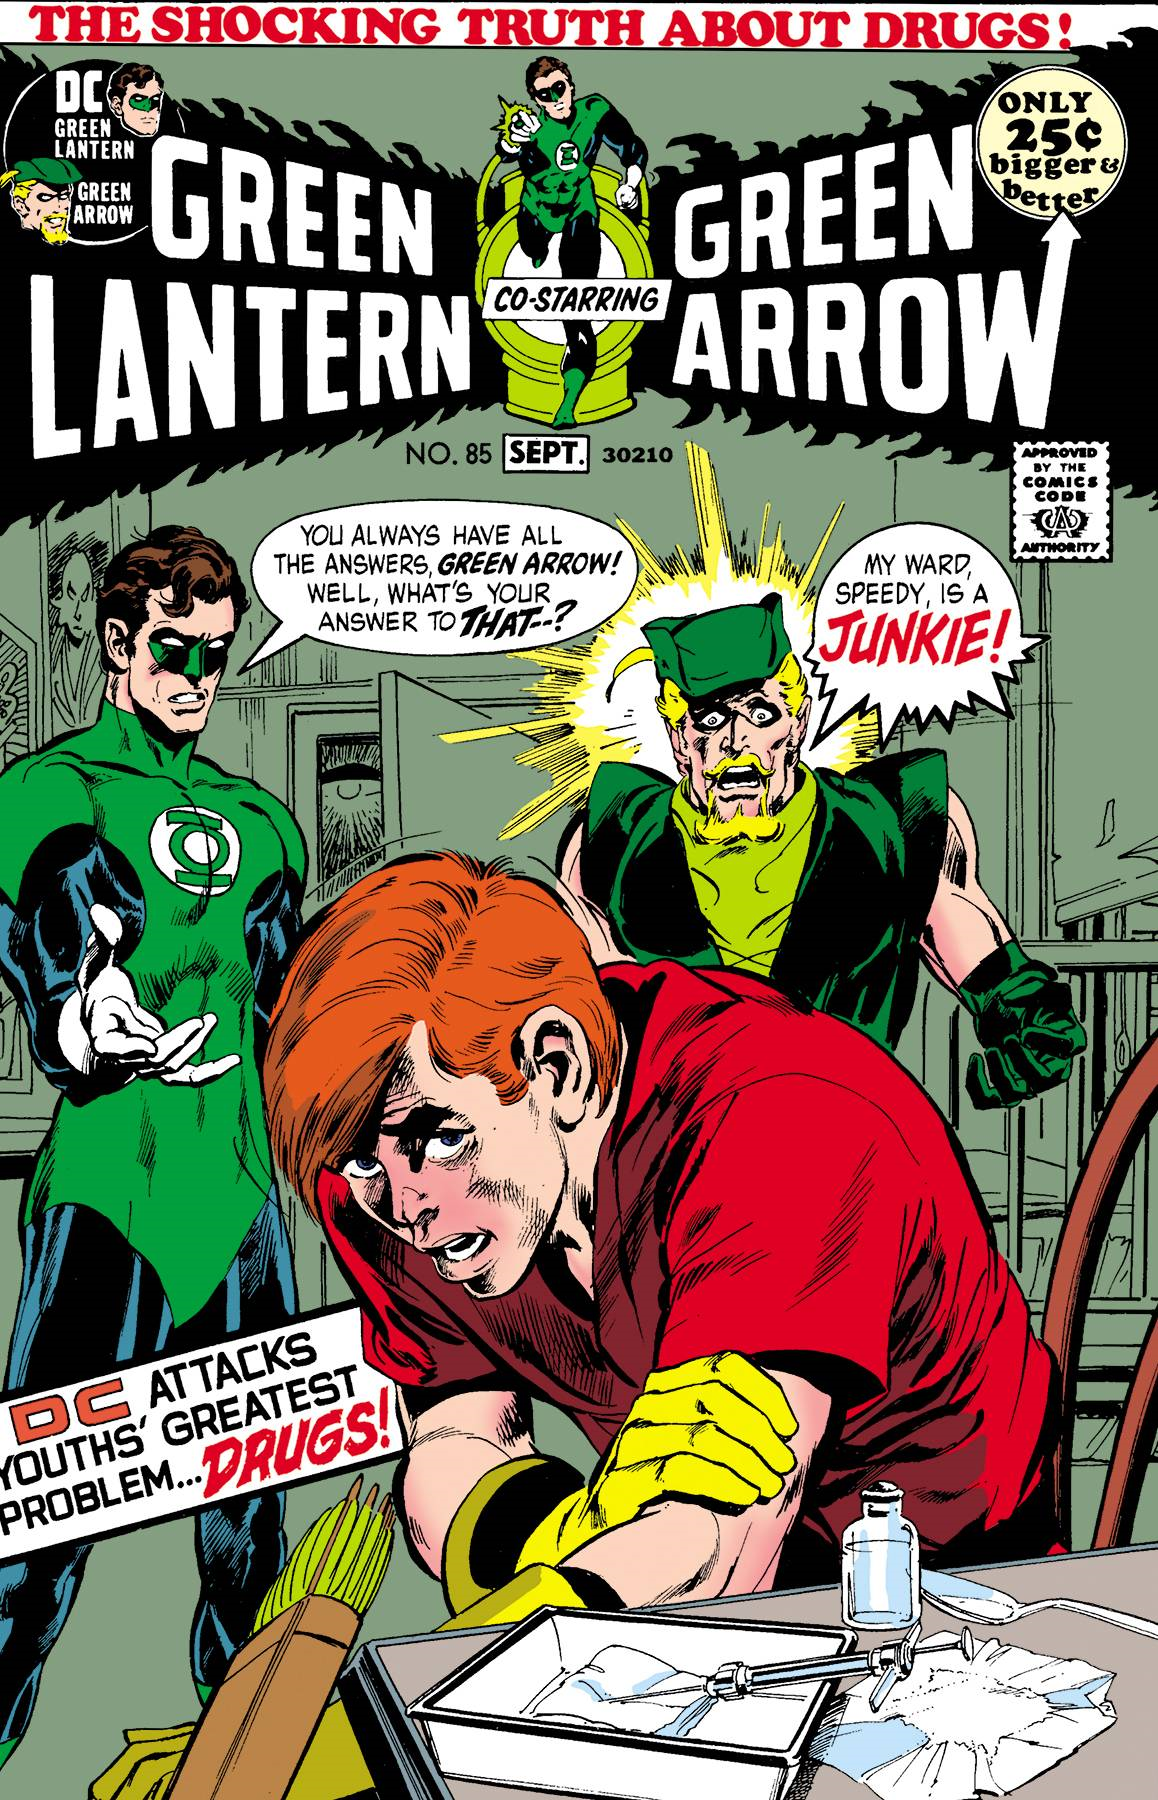 EXCELSIOR !!!! : Episode 9 : Green Lantern & Green Arrow